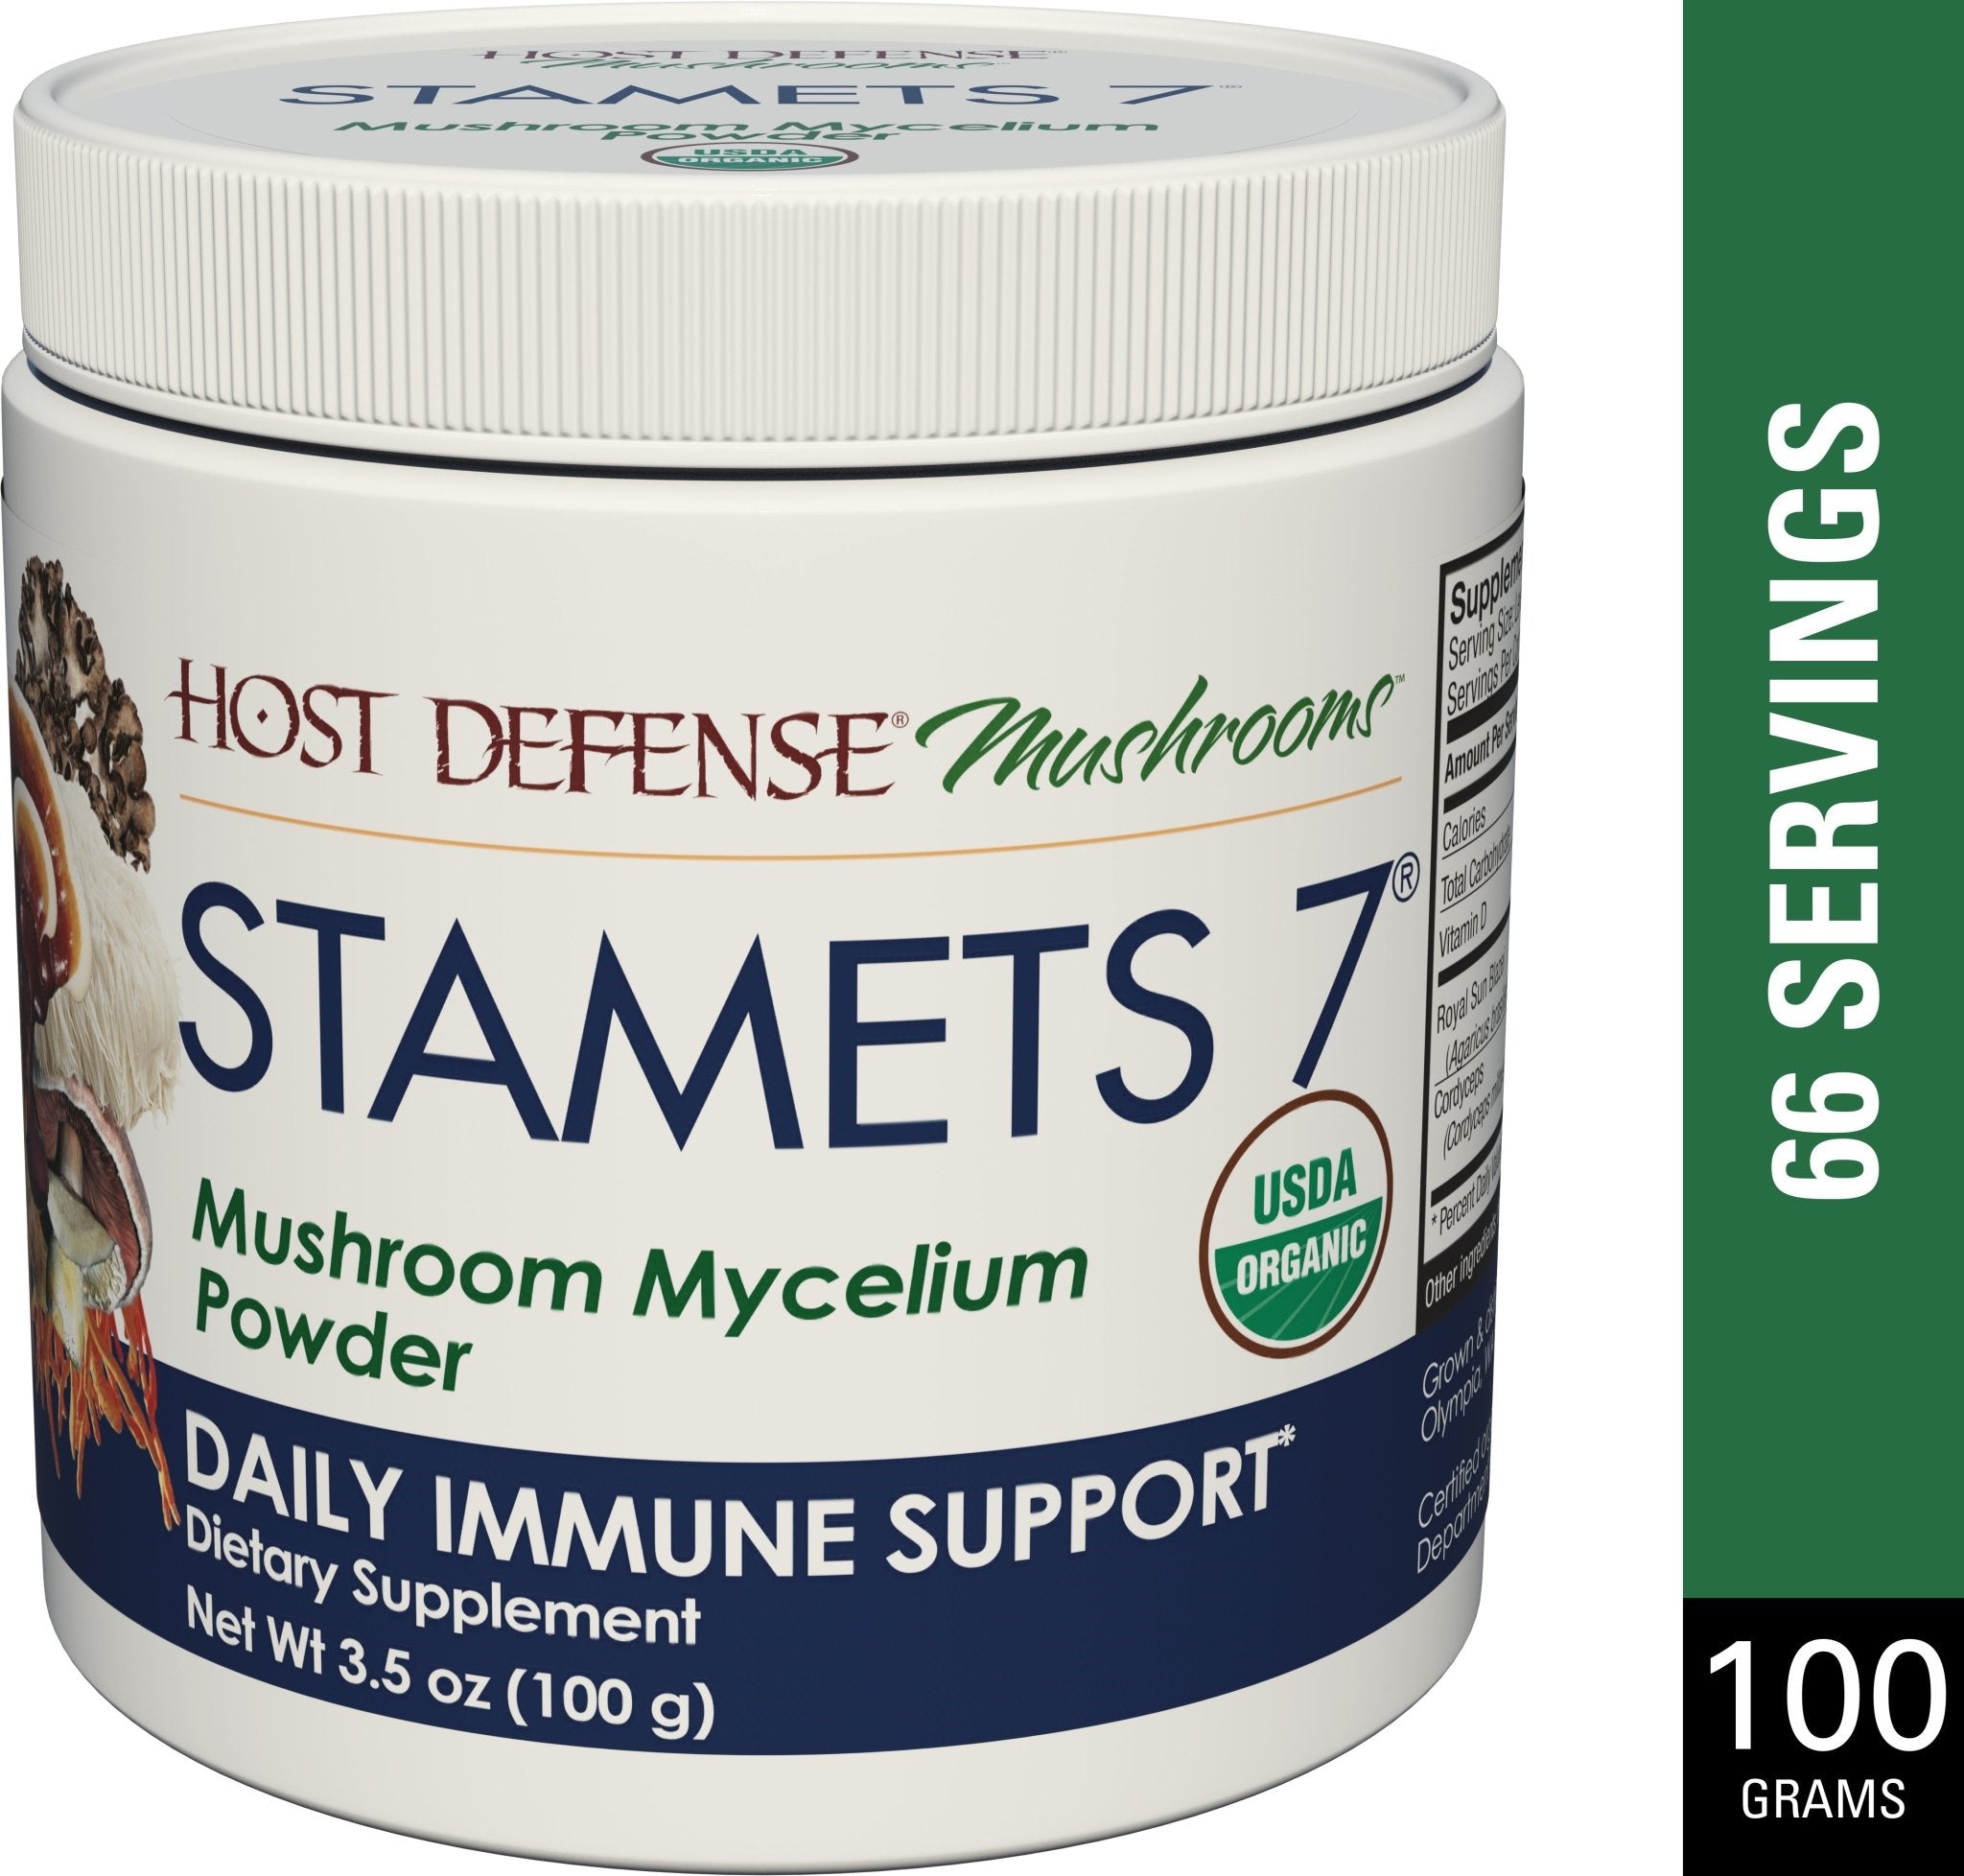 Stamets 7 Powder - Trichome Seattle - Host Defense - Fungi